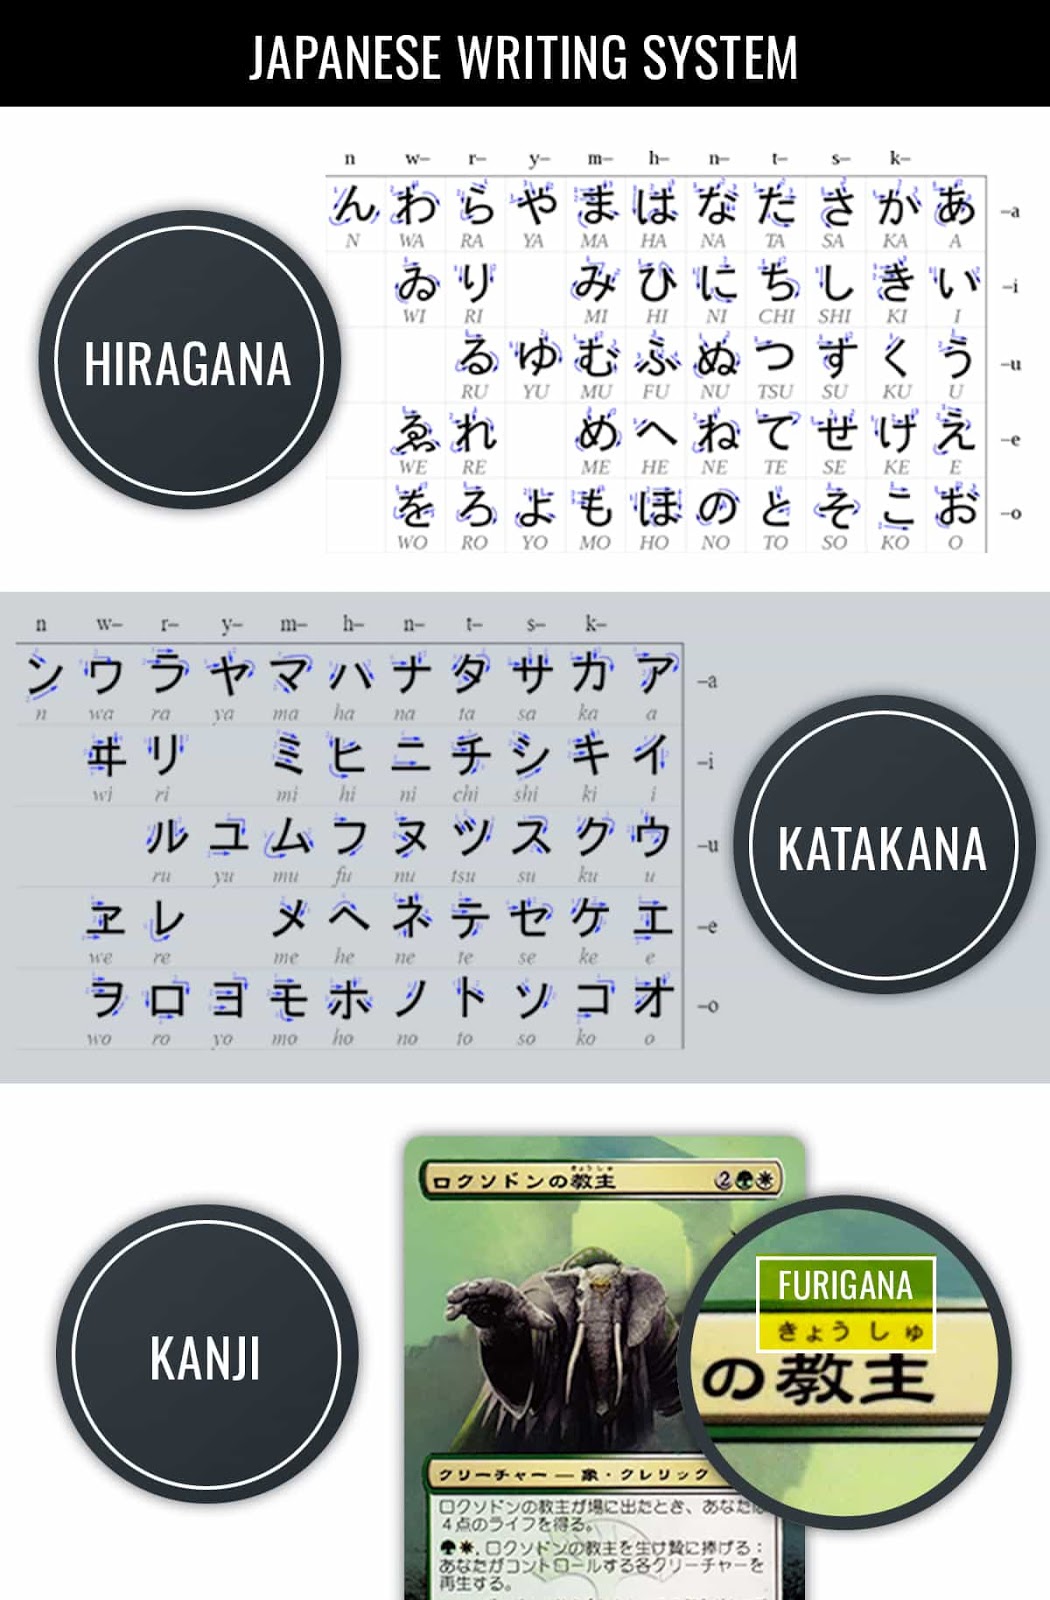 Japanese-Writing-System_2x.jpg